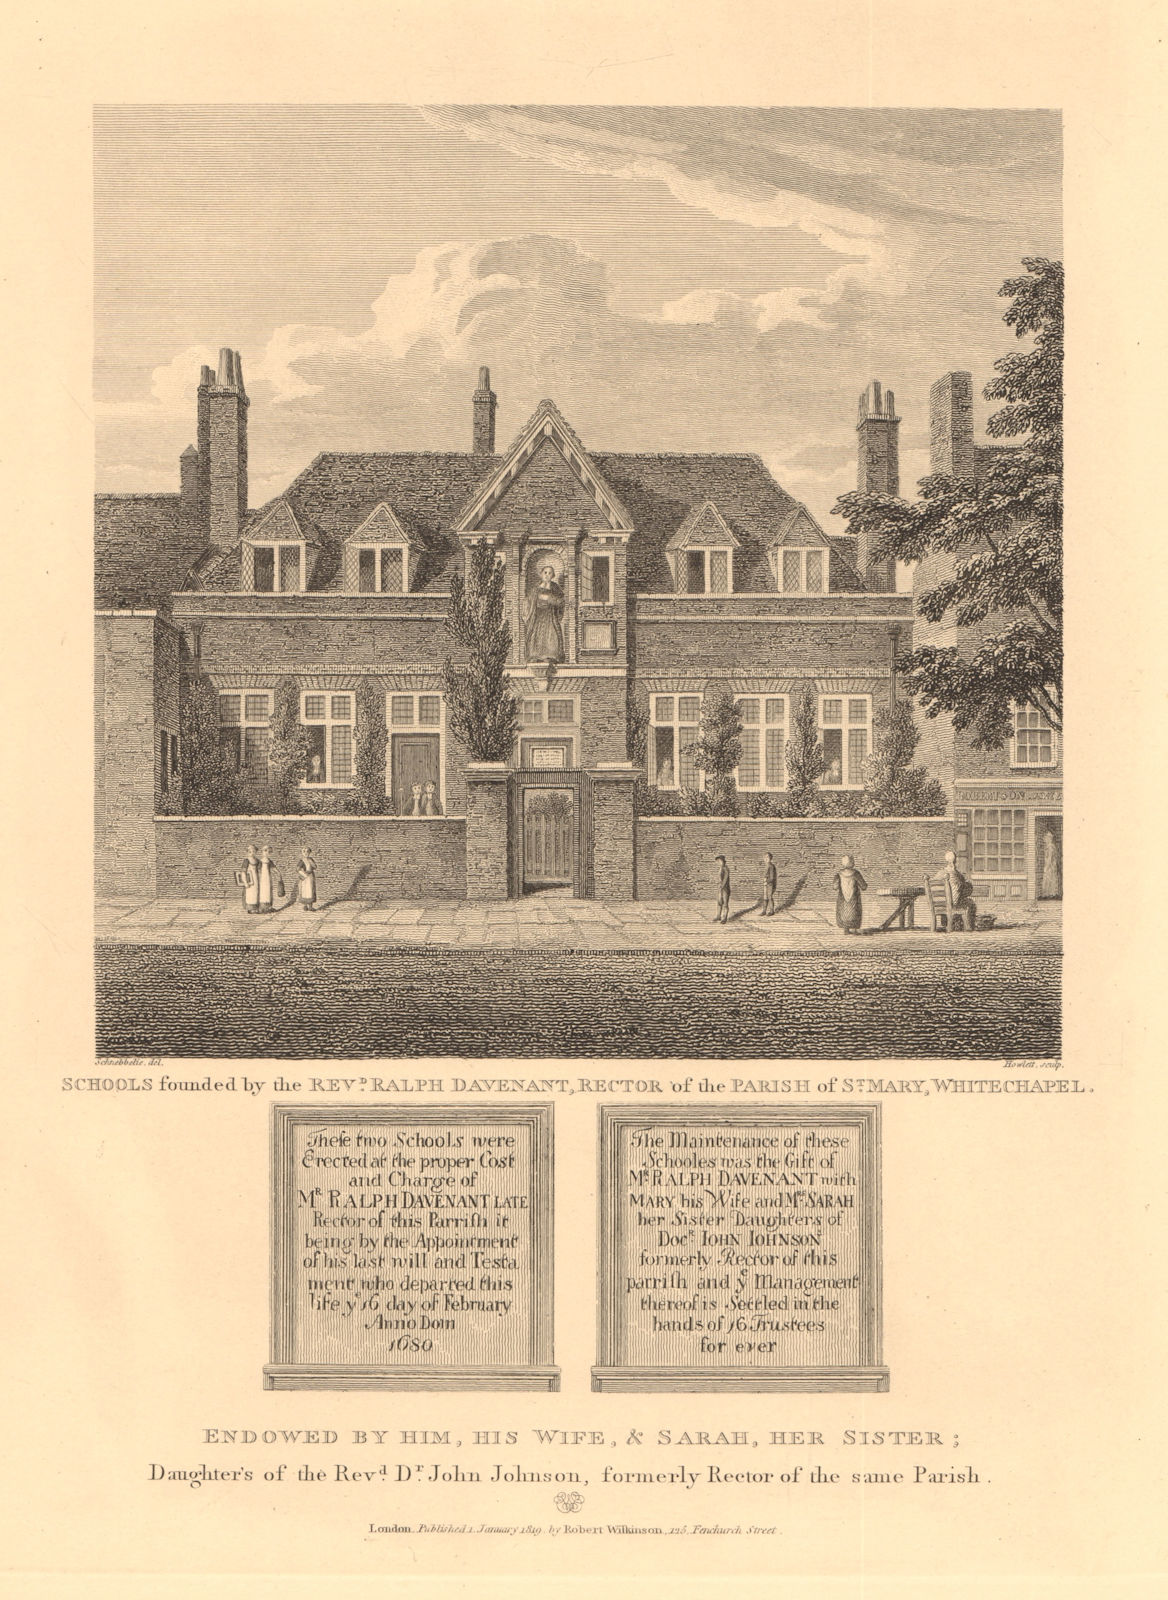 DAVENANT FOUNDATION SCHOOL original Whitechapel site. Now Loughton, Essex 1834